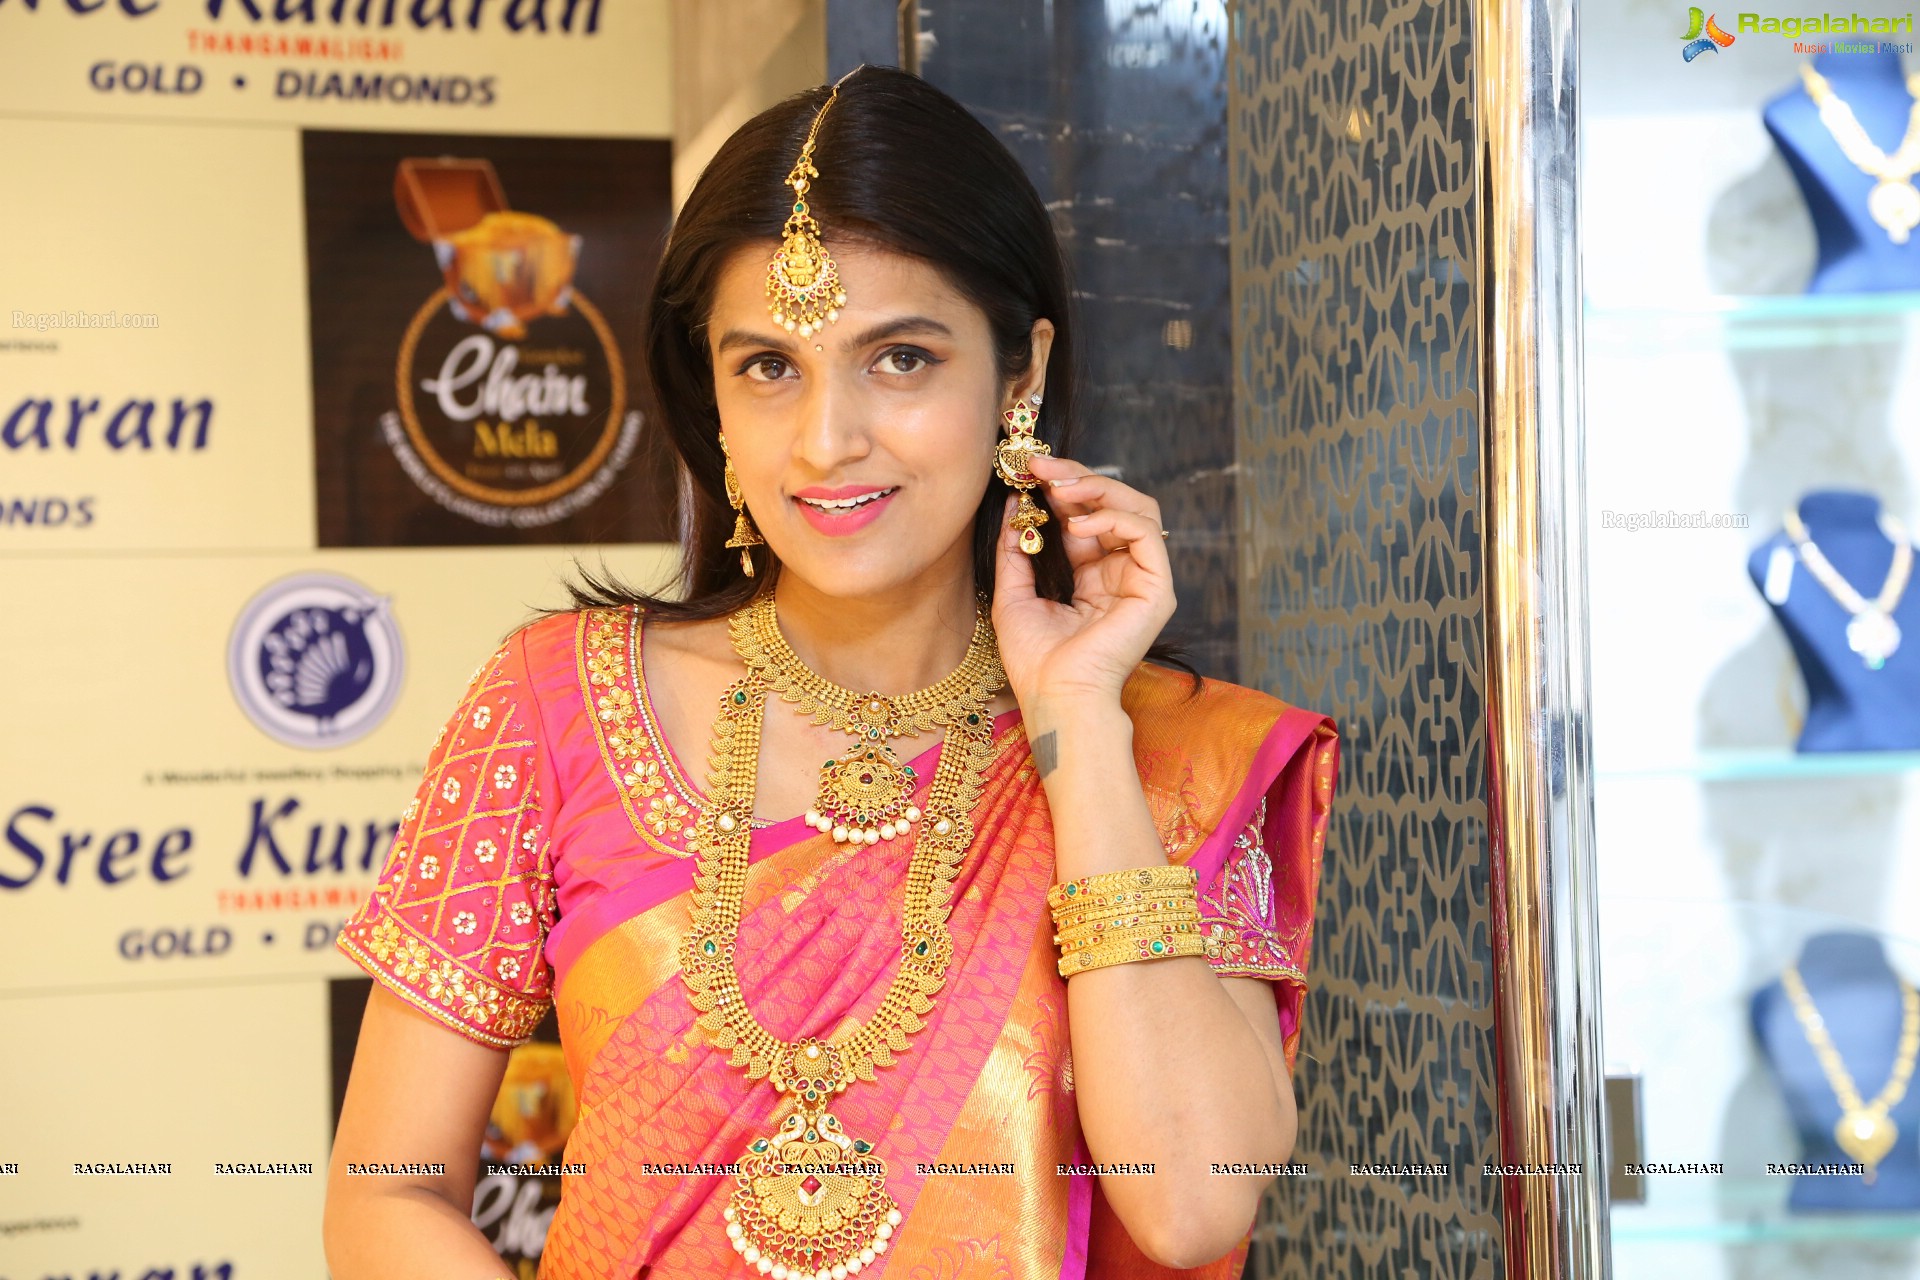 Ritu Biradar at Gold Chainmela (High Definition)